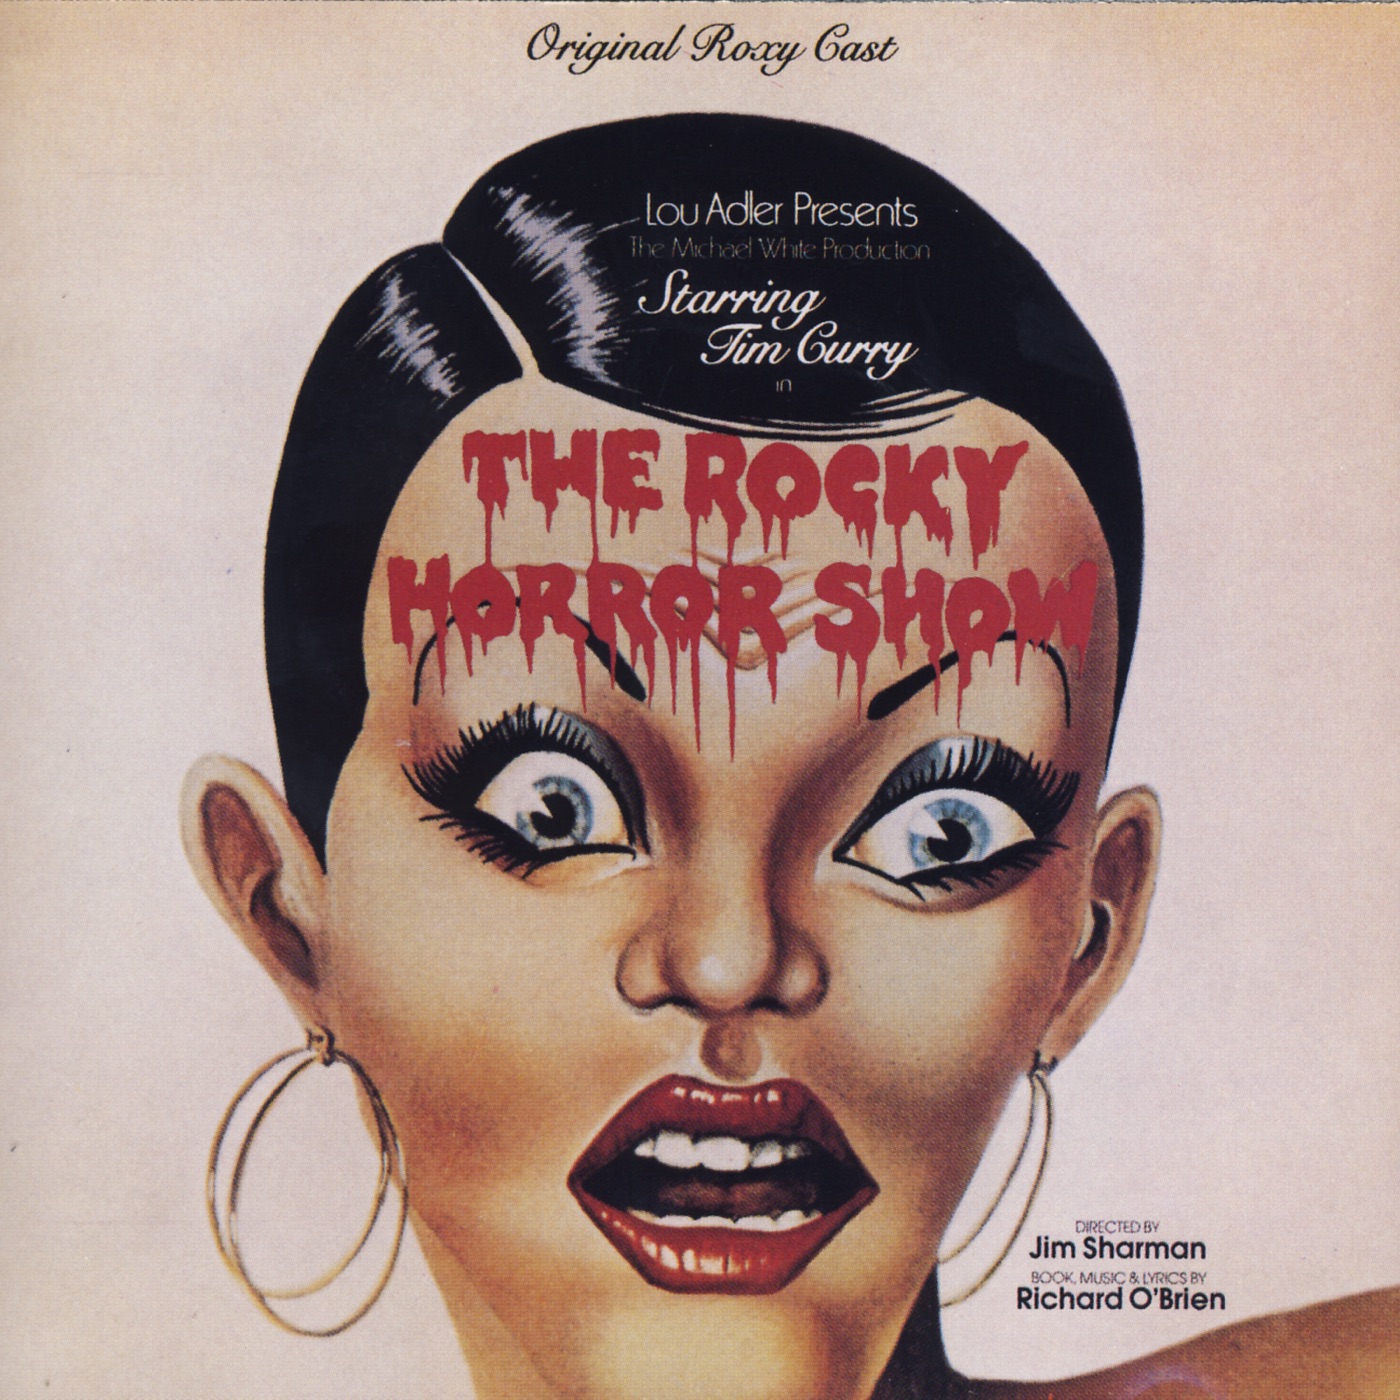 The Rocky Horror Show (Original Australian Cast Recording) by Richard O'Brien, Abigale Haness, B. Miller